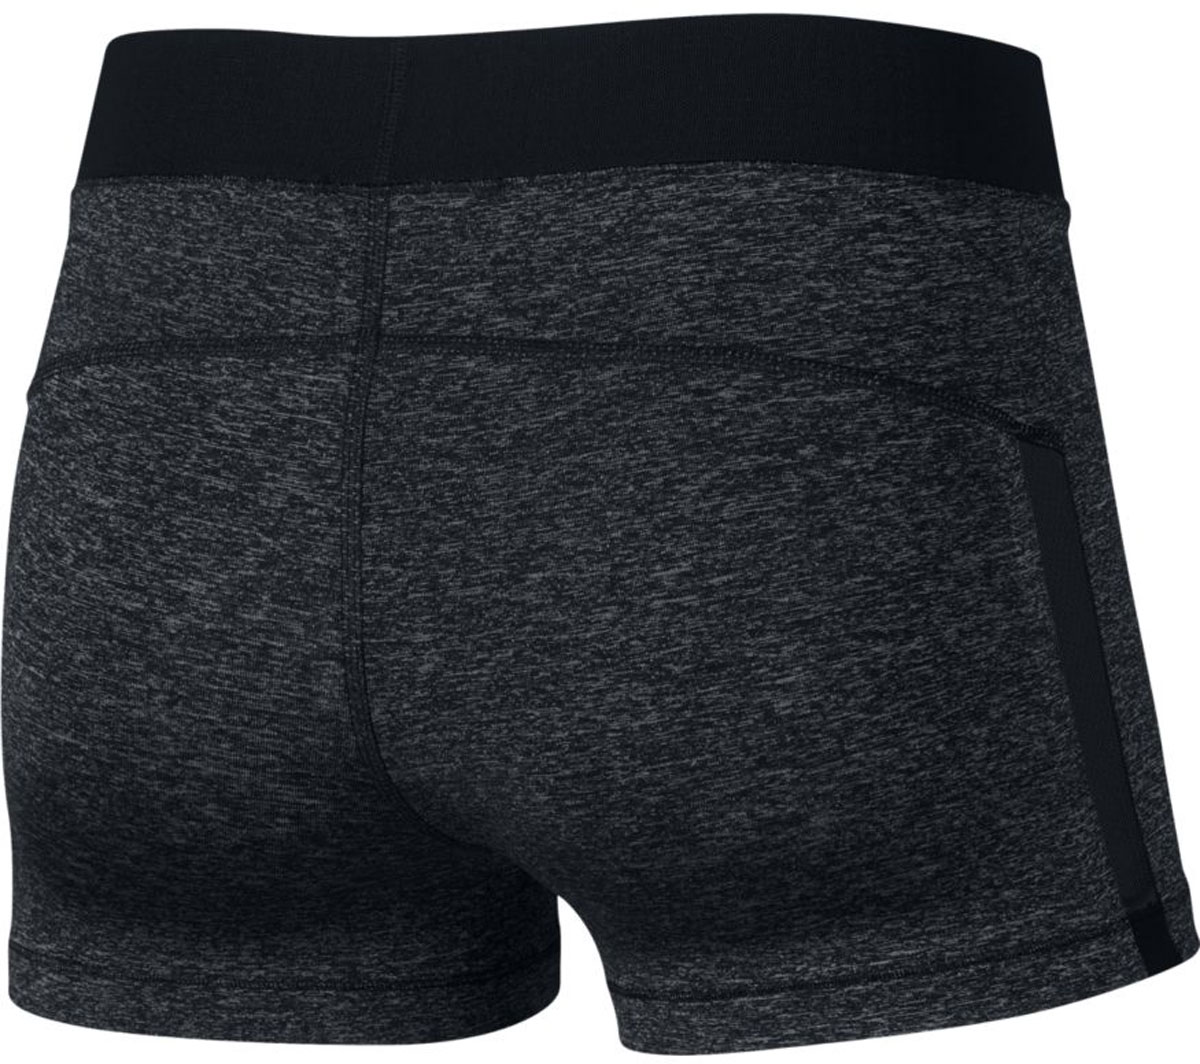 Women’s training shorts